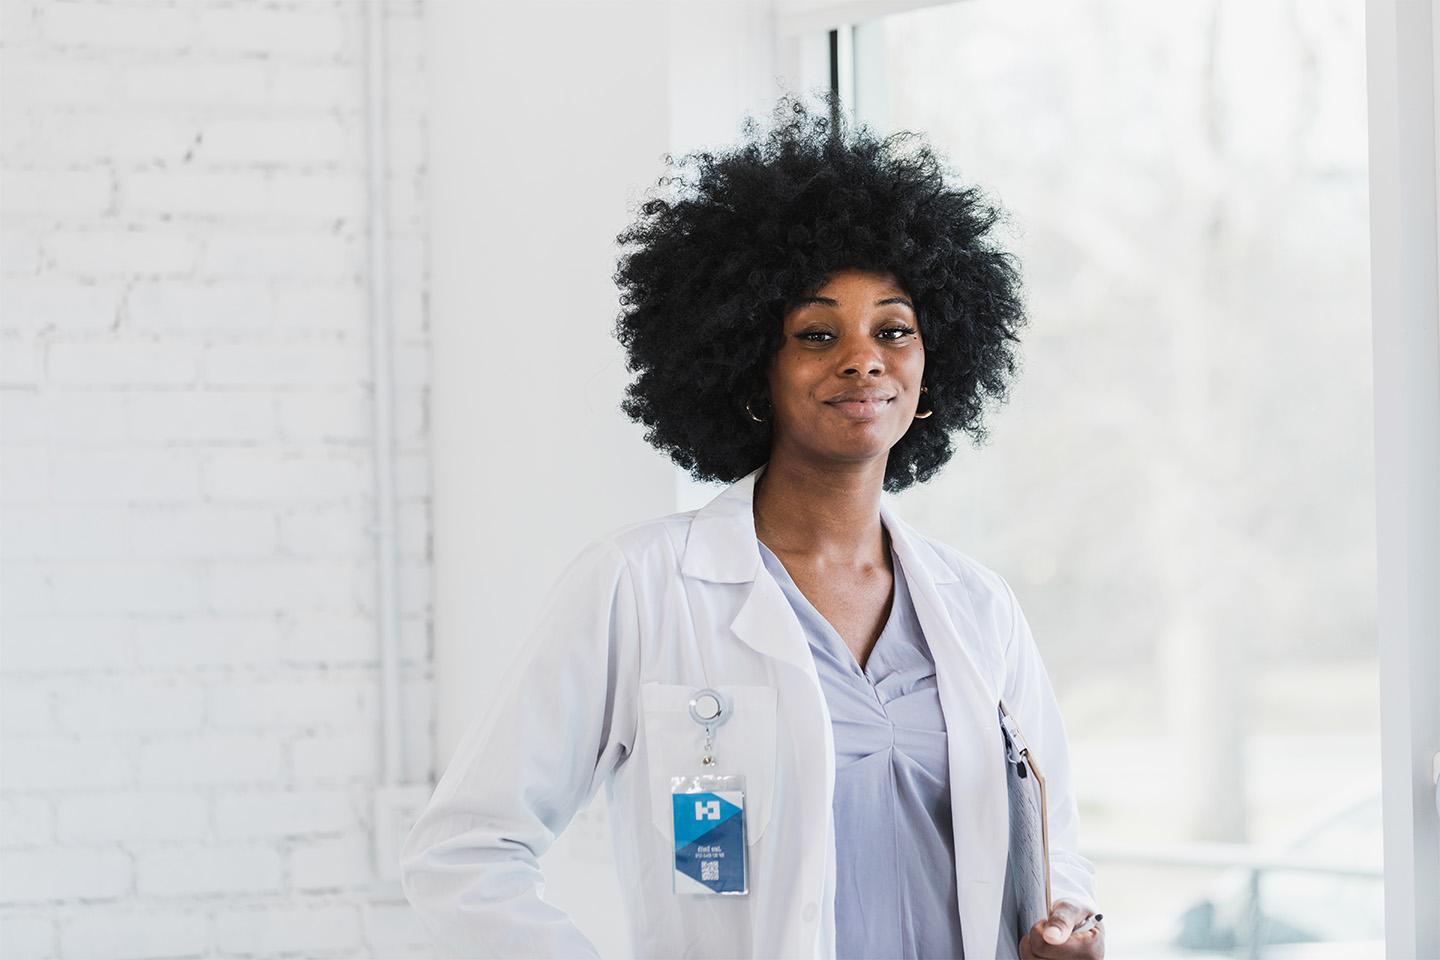 Nurse Practitioner Named Best Job That Helps People